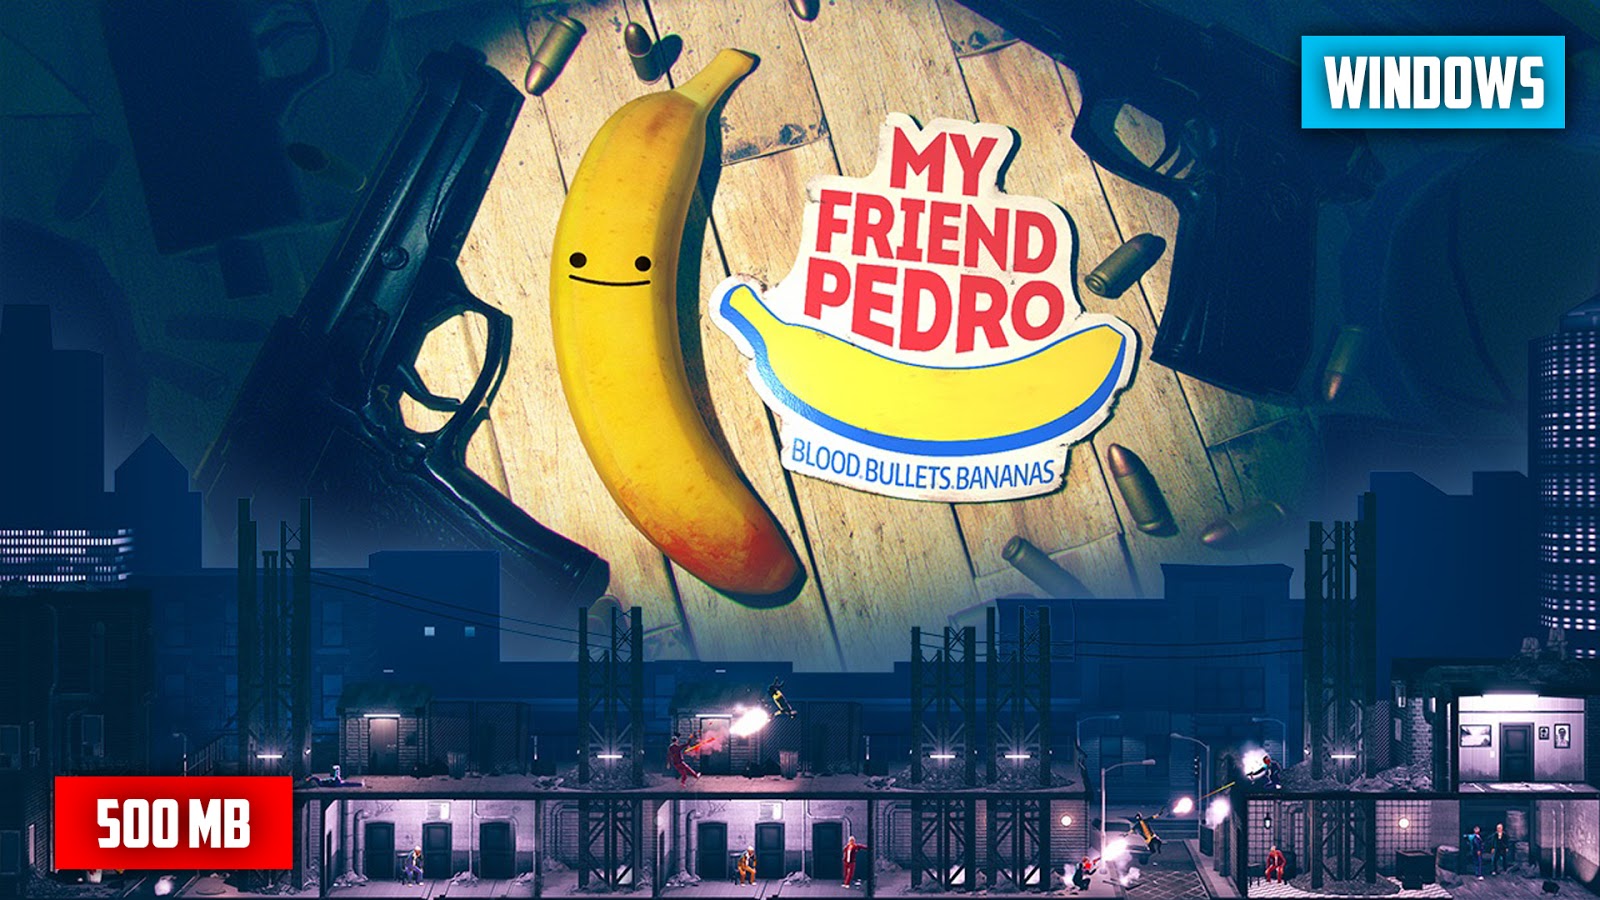 My friend paul. Игра про банана Педро. Игра my friend Pedro 2. Май френд Педро банан. Мой друг Педро.